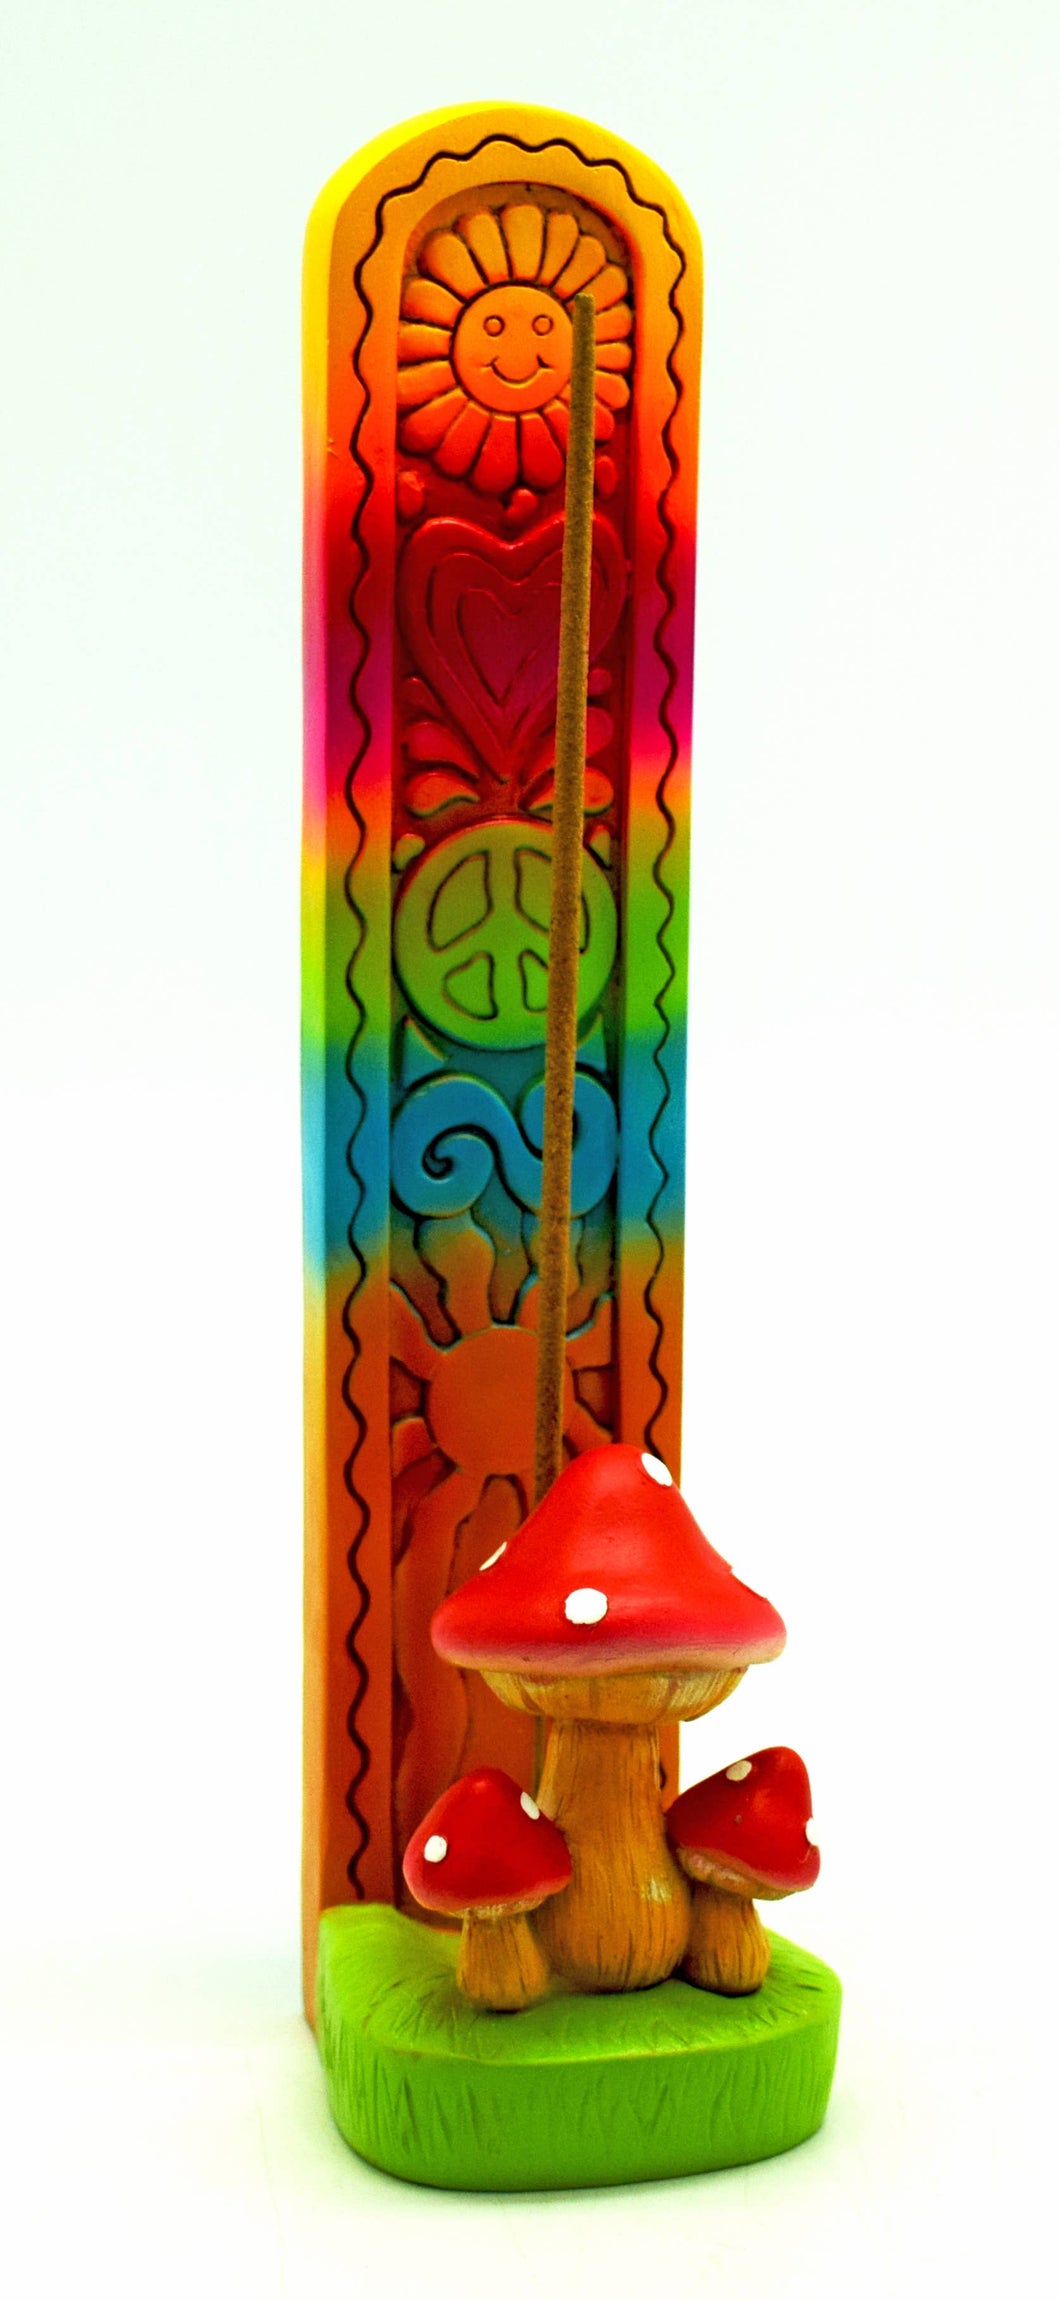 Standing Mushroom Incense Burner with Chakra Colors